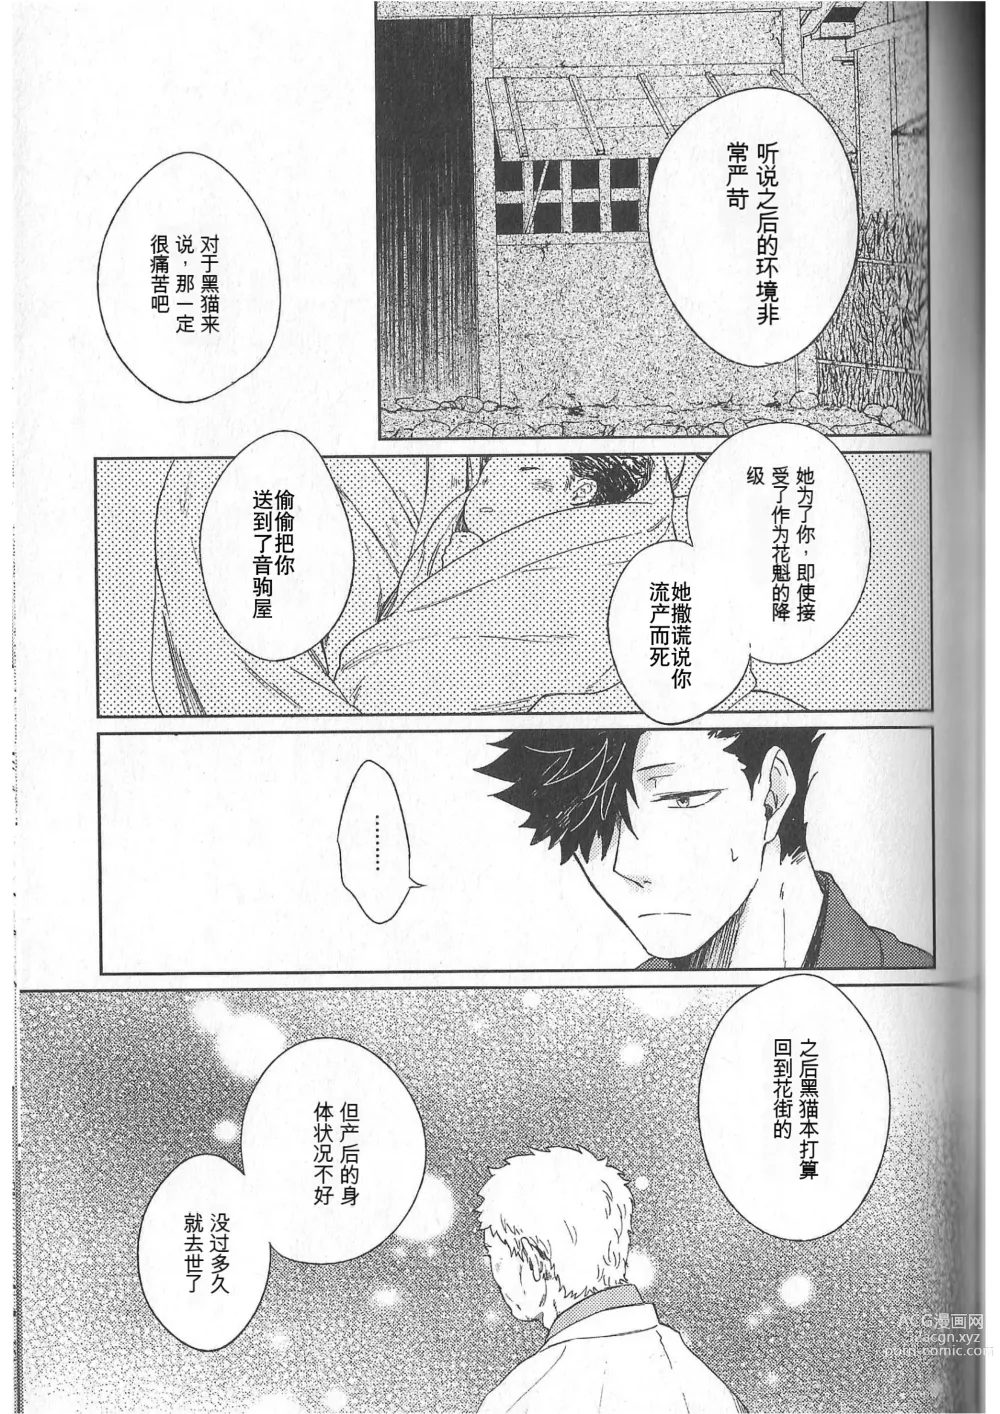 Page 26 of doujinshi 破晓之枭后篇